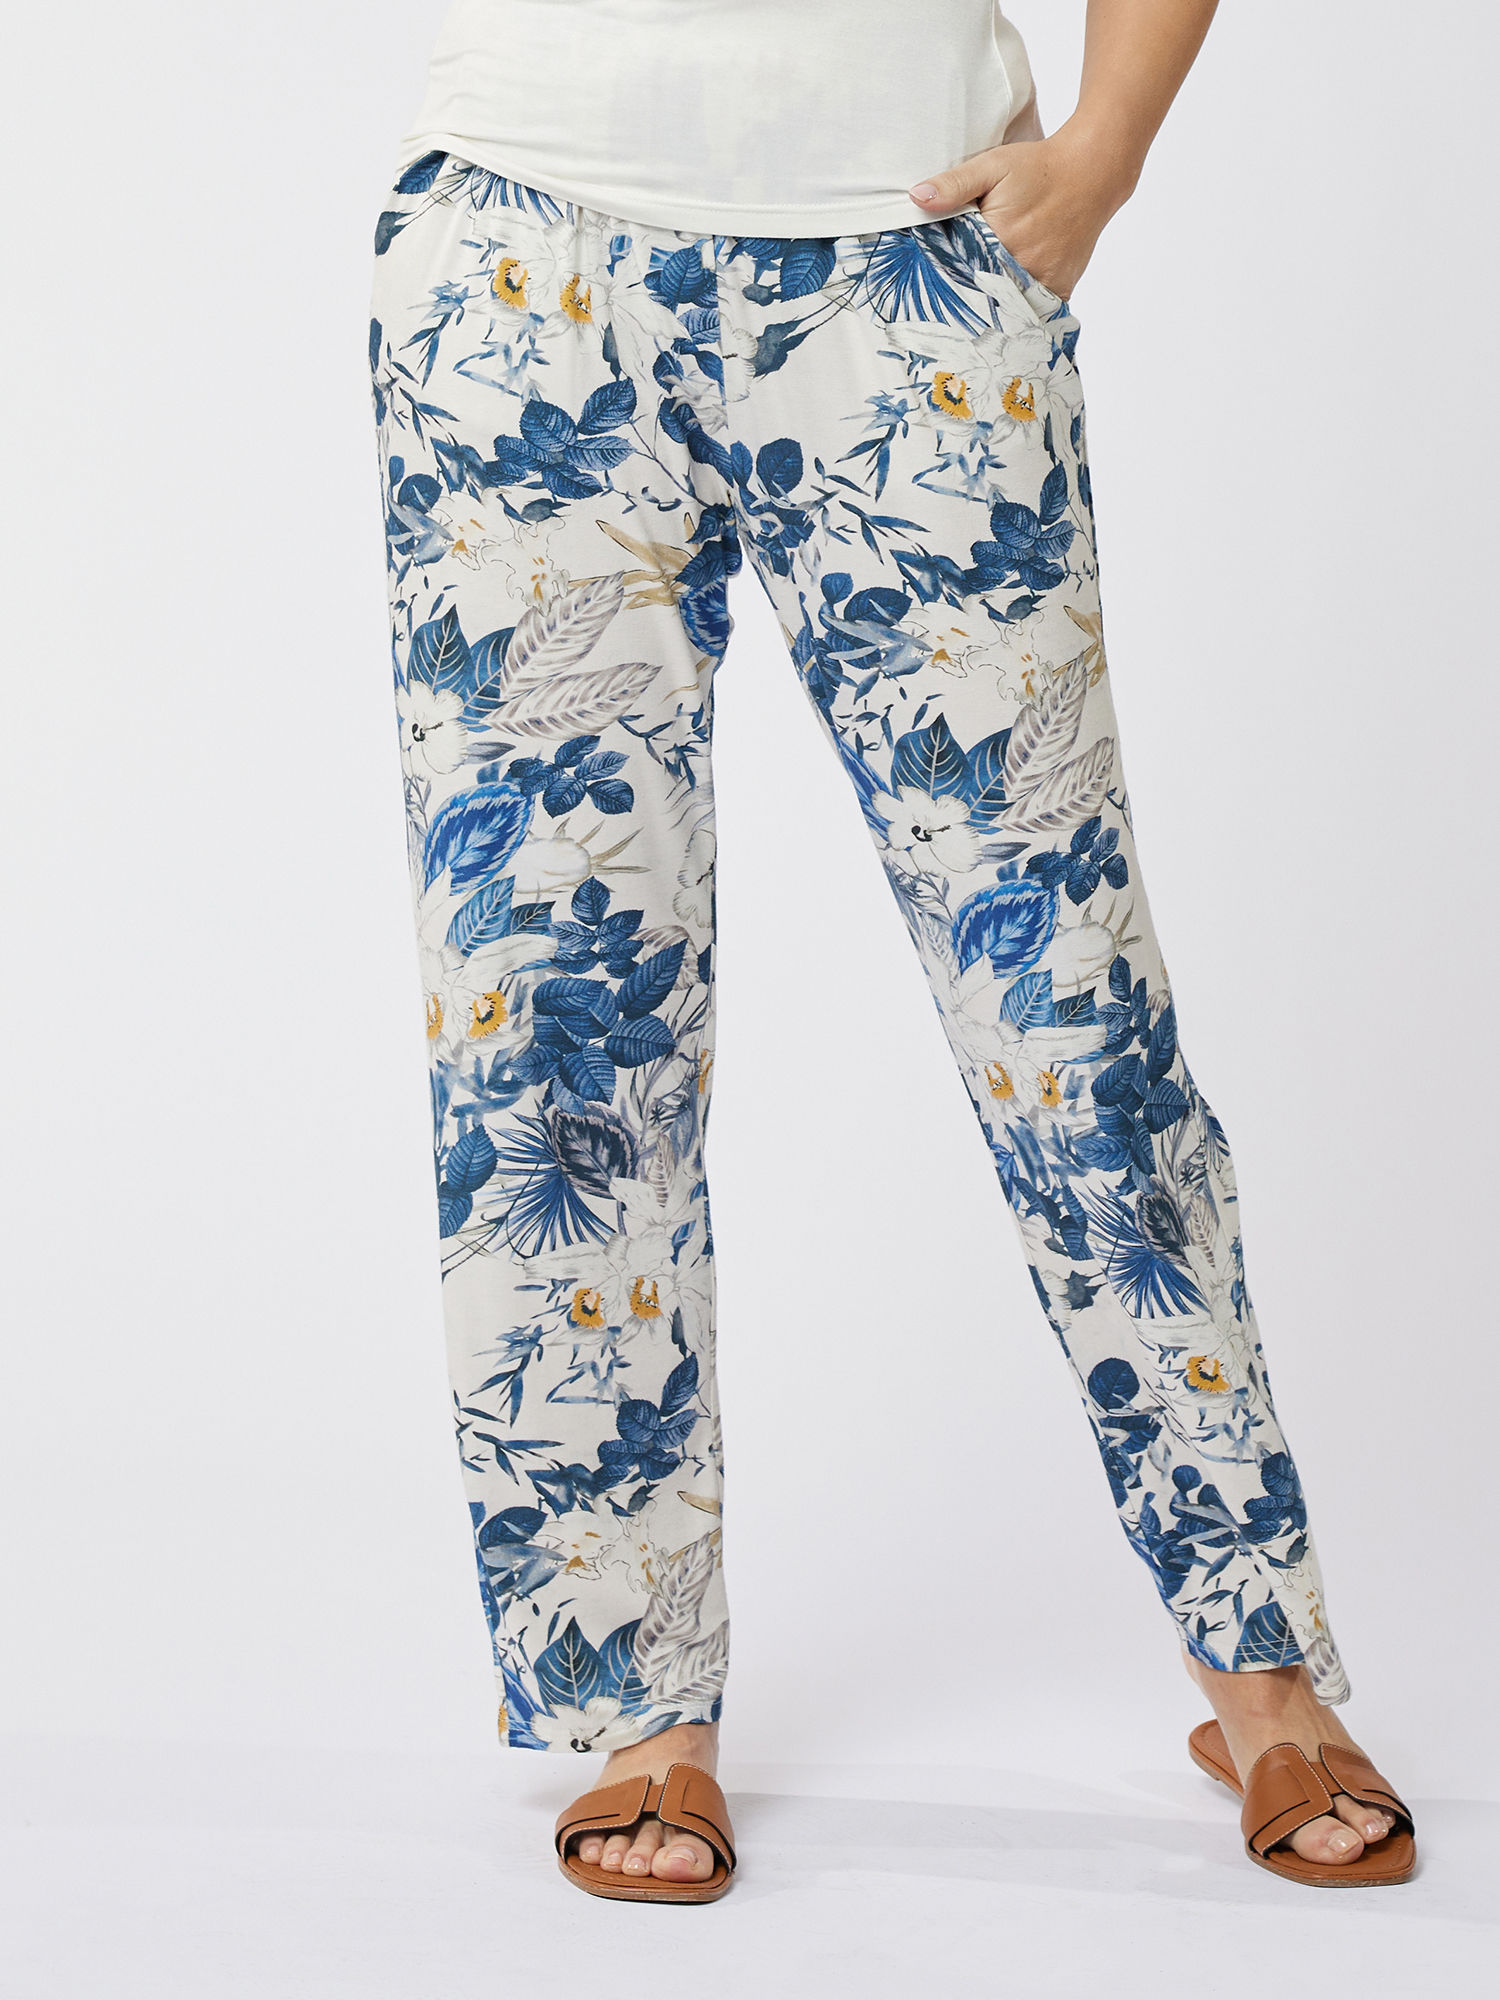 Loungewear Hose Blumen - SILHOUETTE Sarah - Kern - Marken